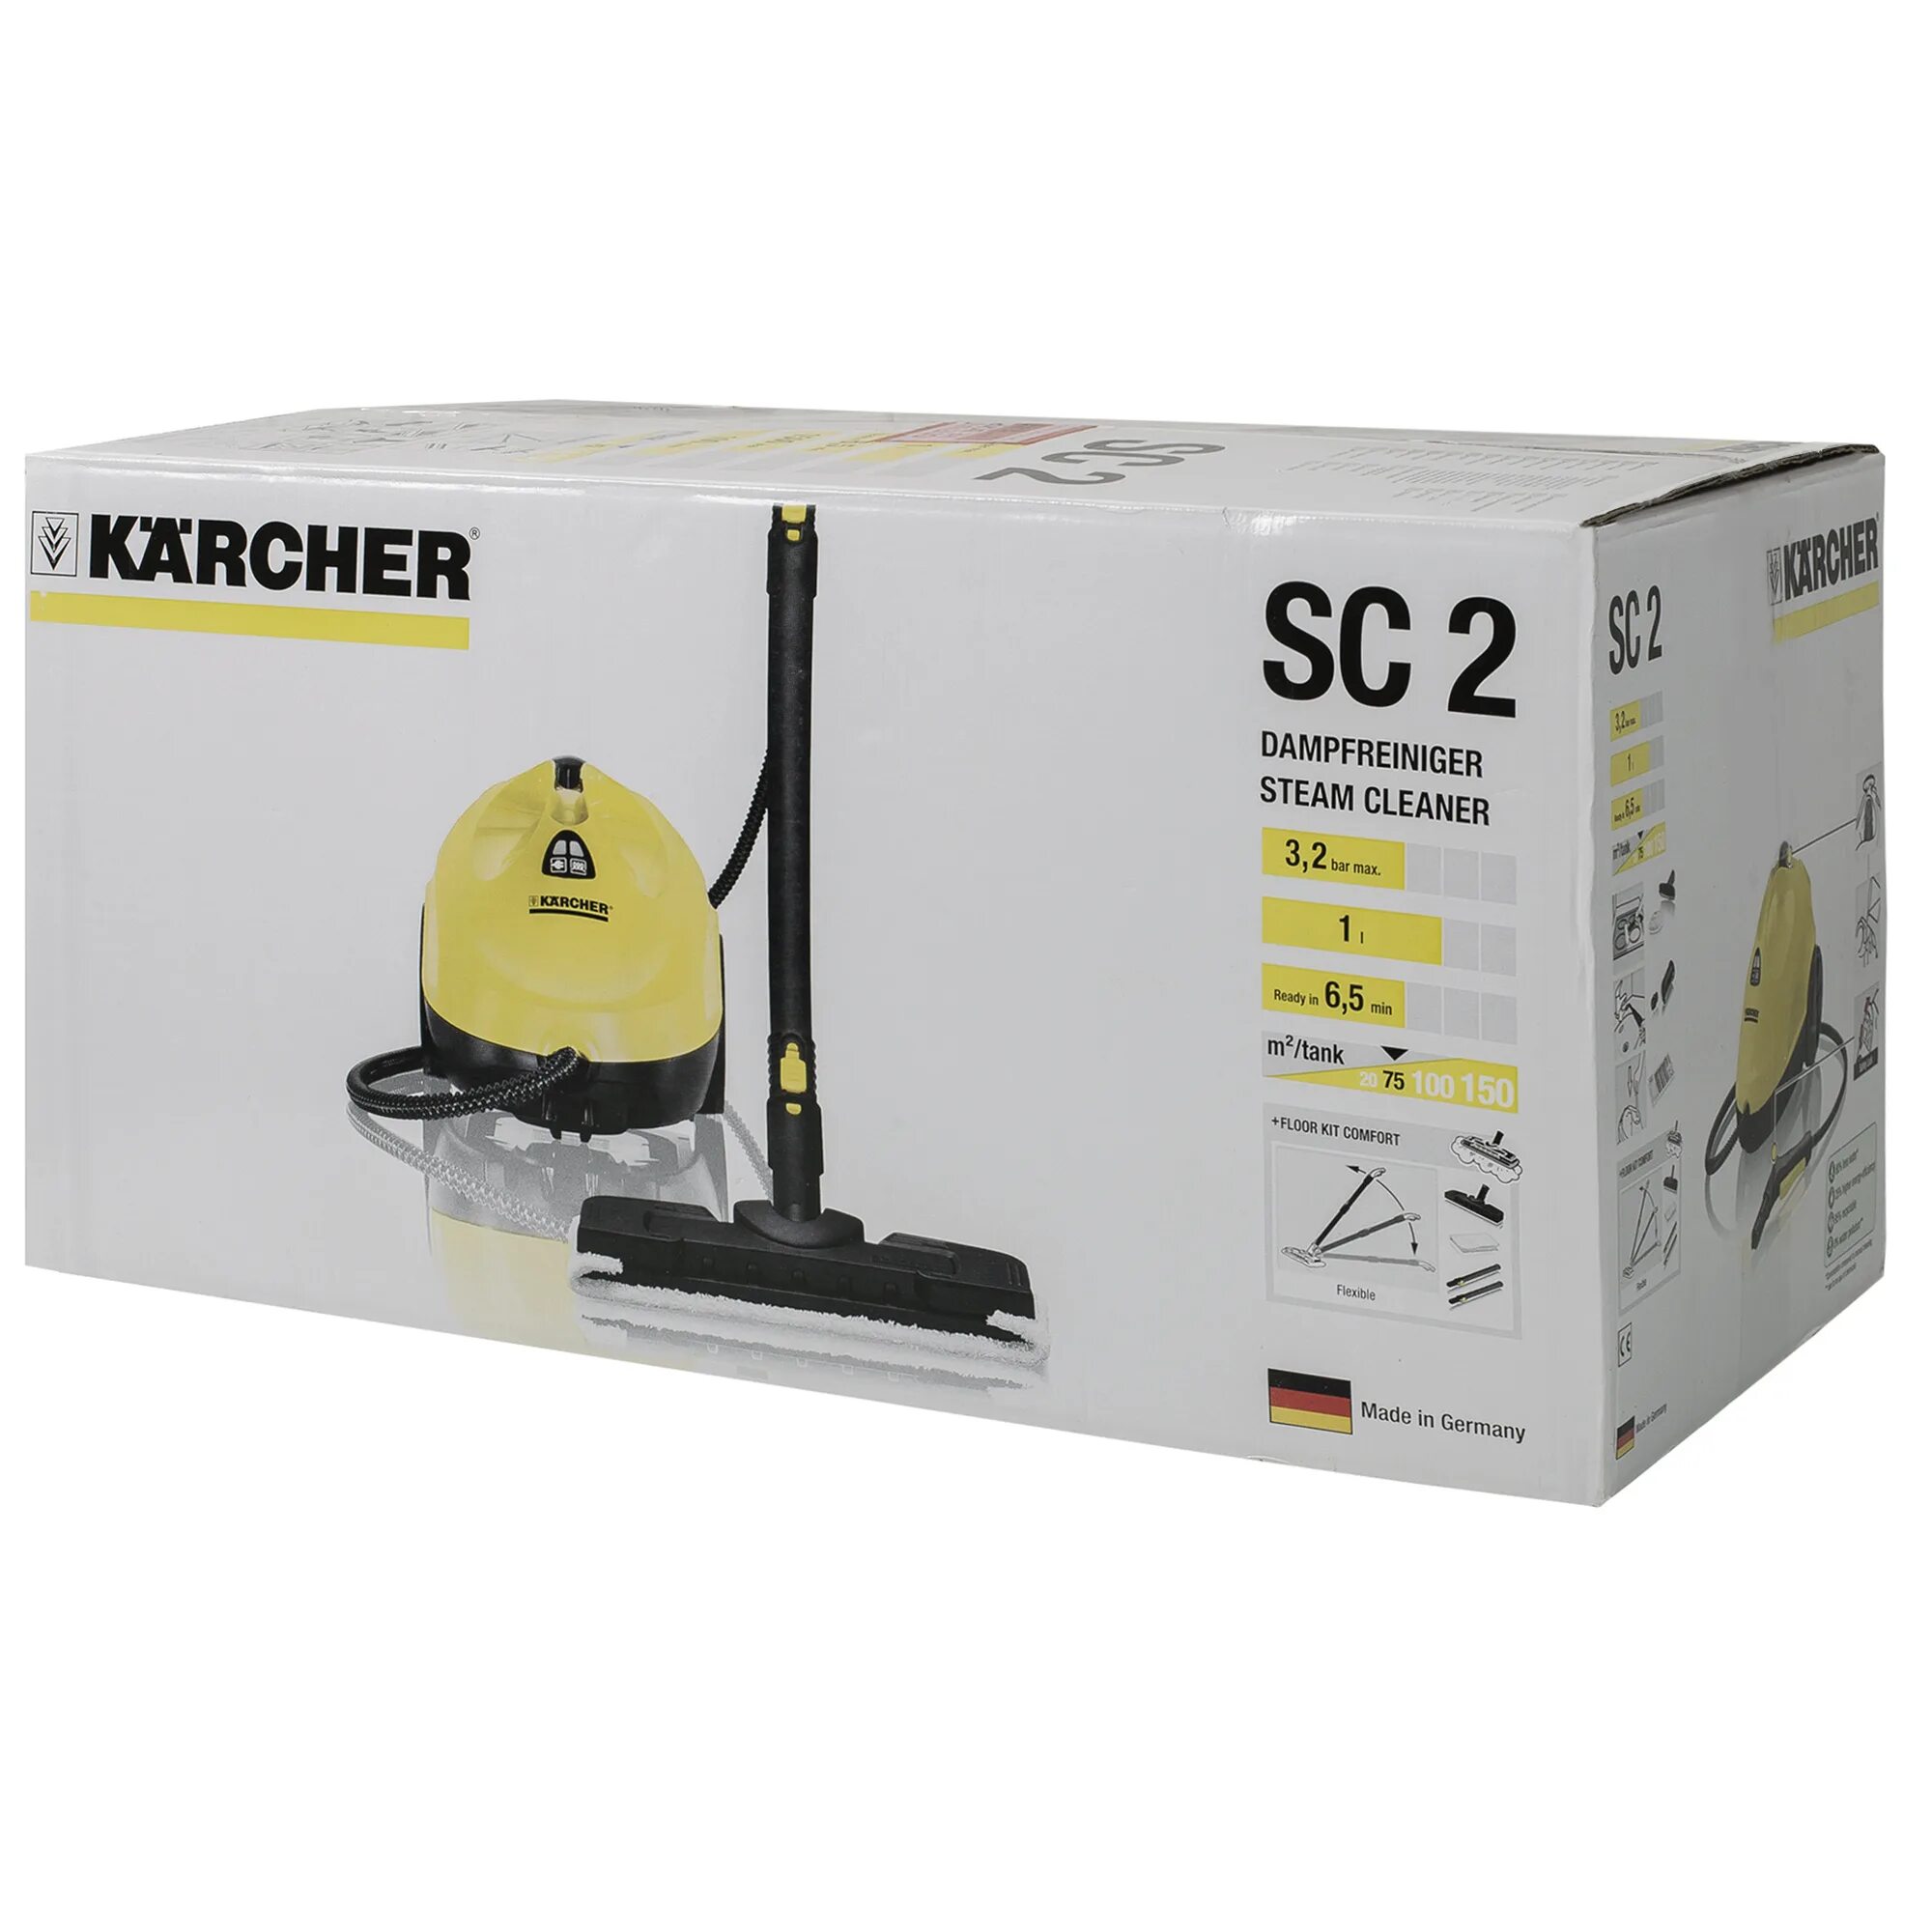 Керхер бар. Пароочиститель Karcher SC 2 EASYFIX, 1500 Вт, 3.2 бар. Пароочиститель Karcher CS 2 1500вт 3,2бар. Пароочиститель Karcher SC 2. Керхер sc2 комплектация.